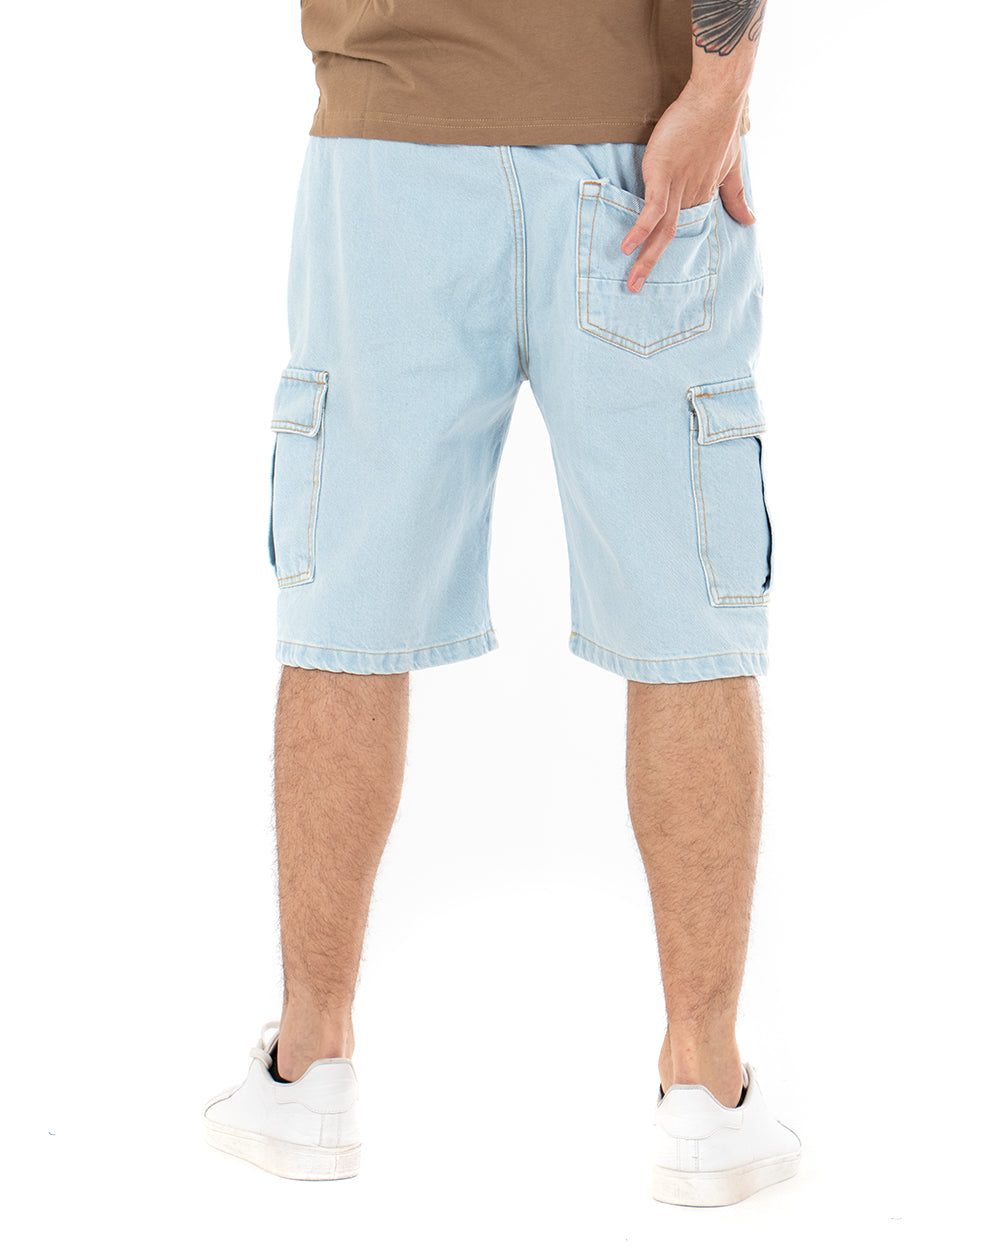 Bermuda Pantaloncino Corto Uomo Cargo Jeans Denim Chiaro GIOSAL-PC1751A